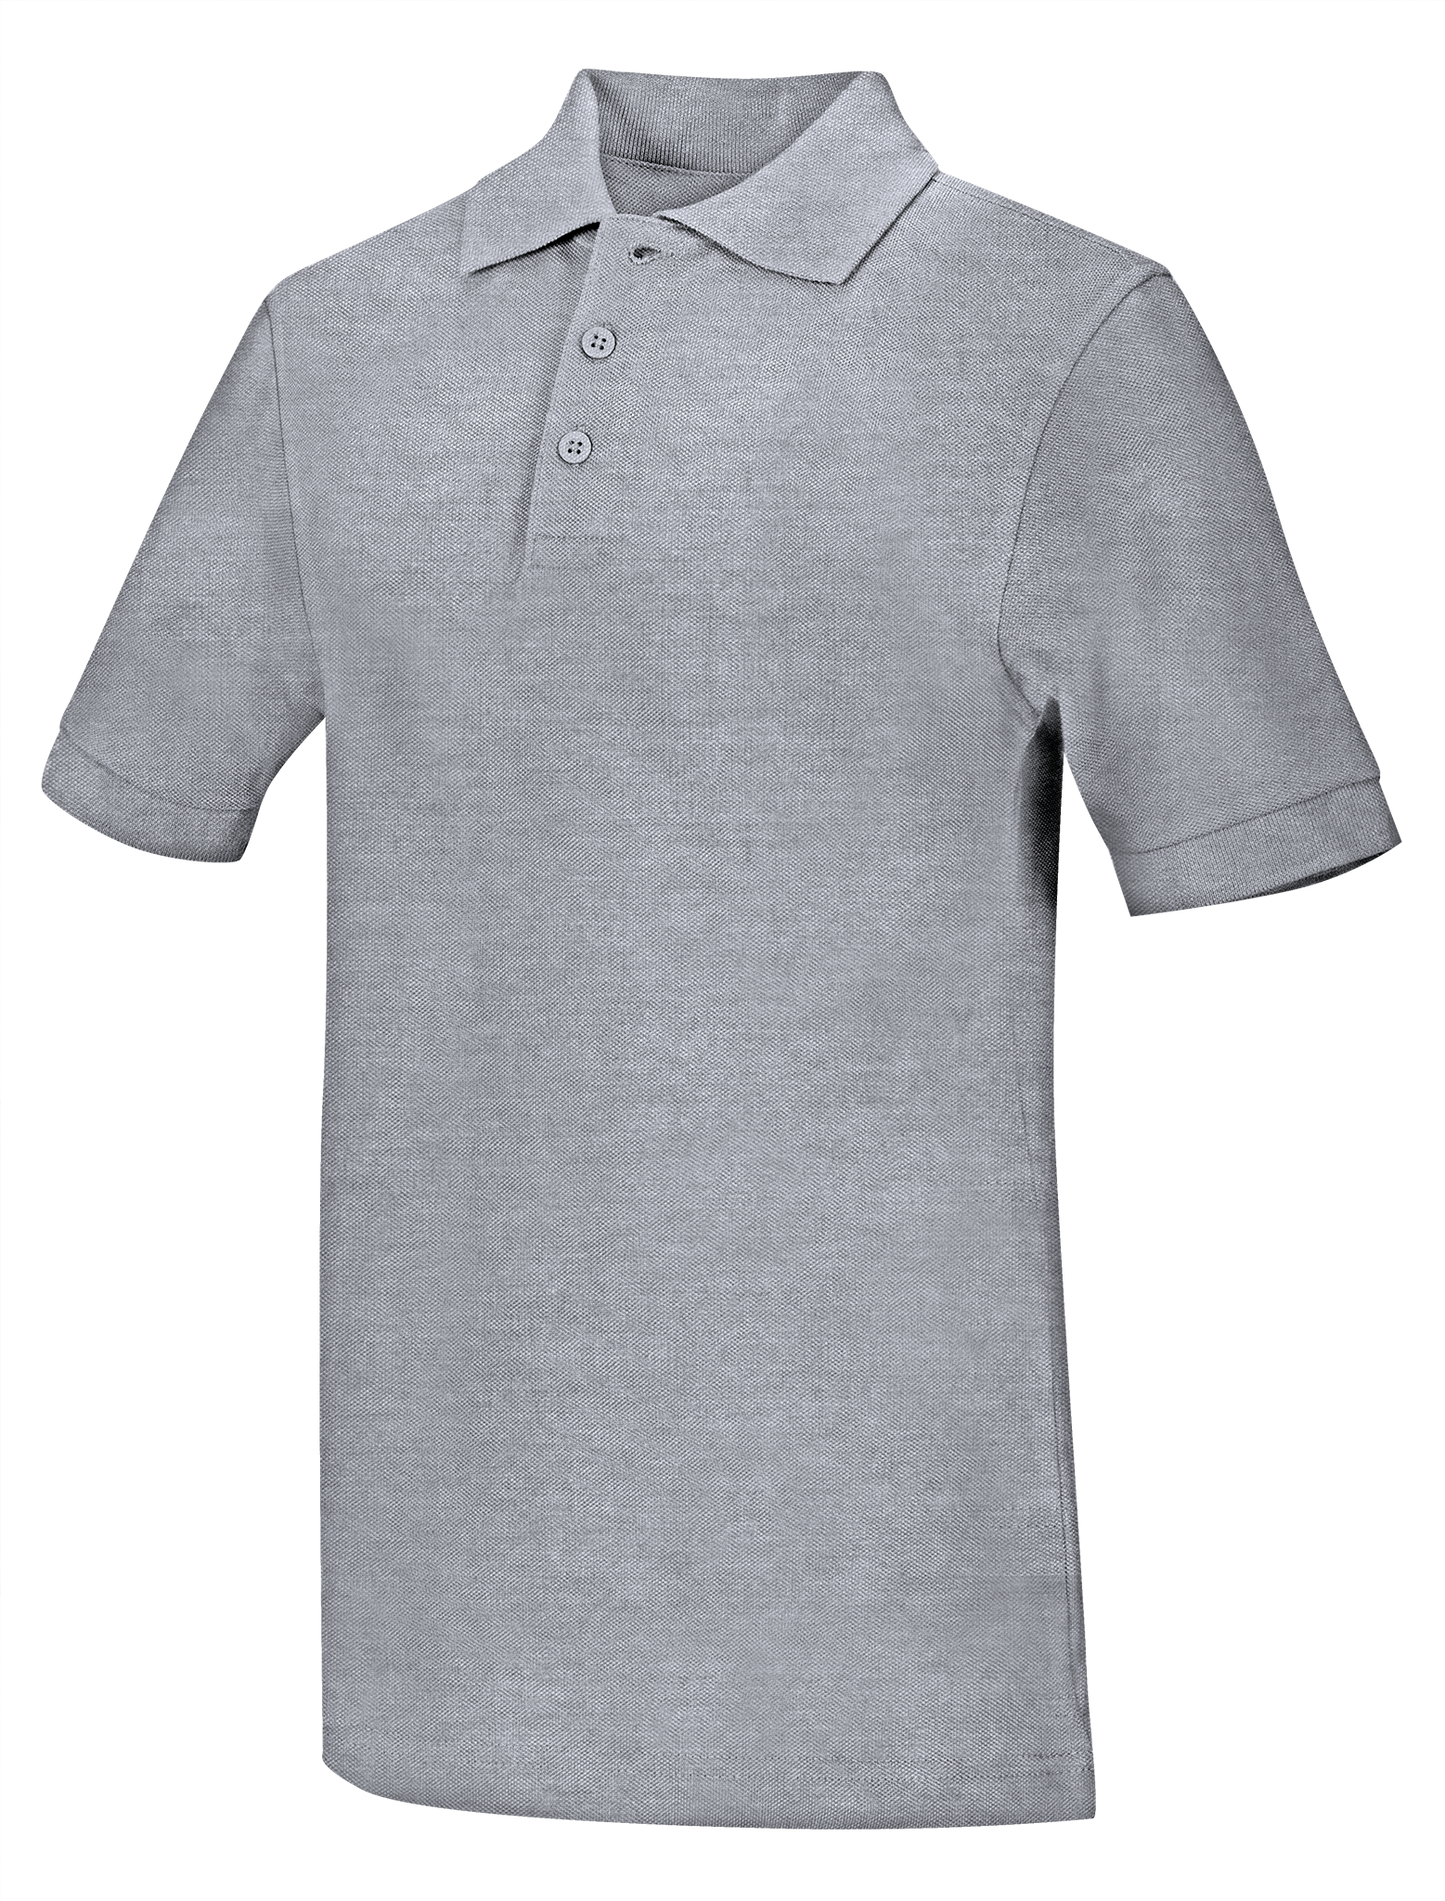 Adult Plus Sizes Unisex Short Sleeve Pique Polo